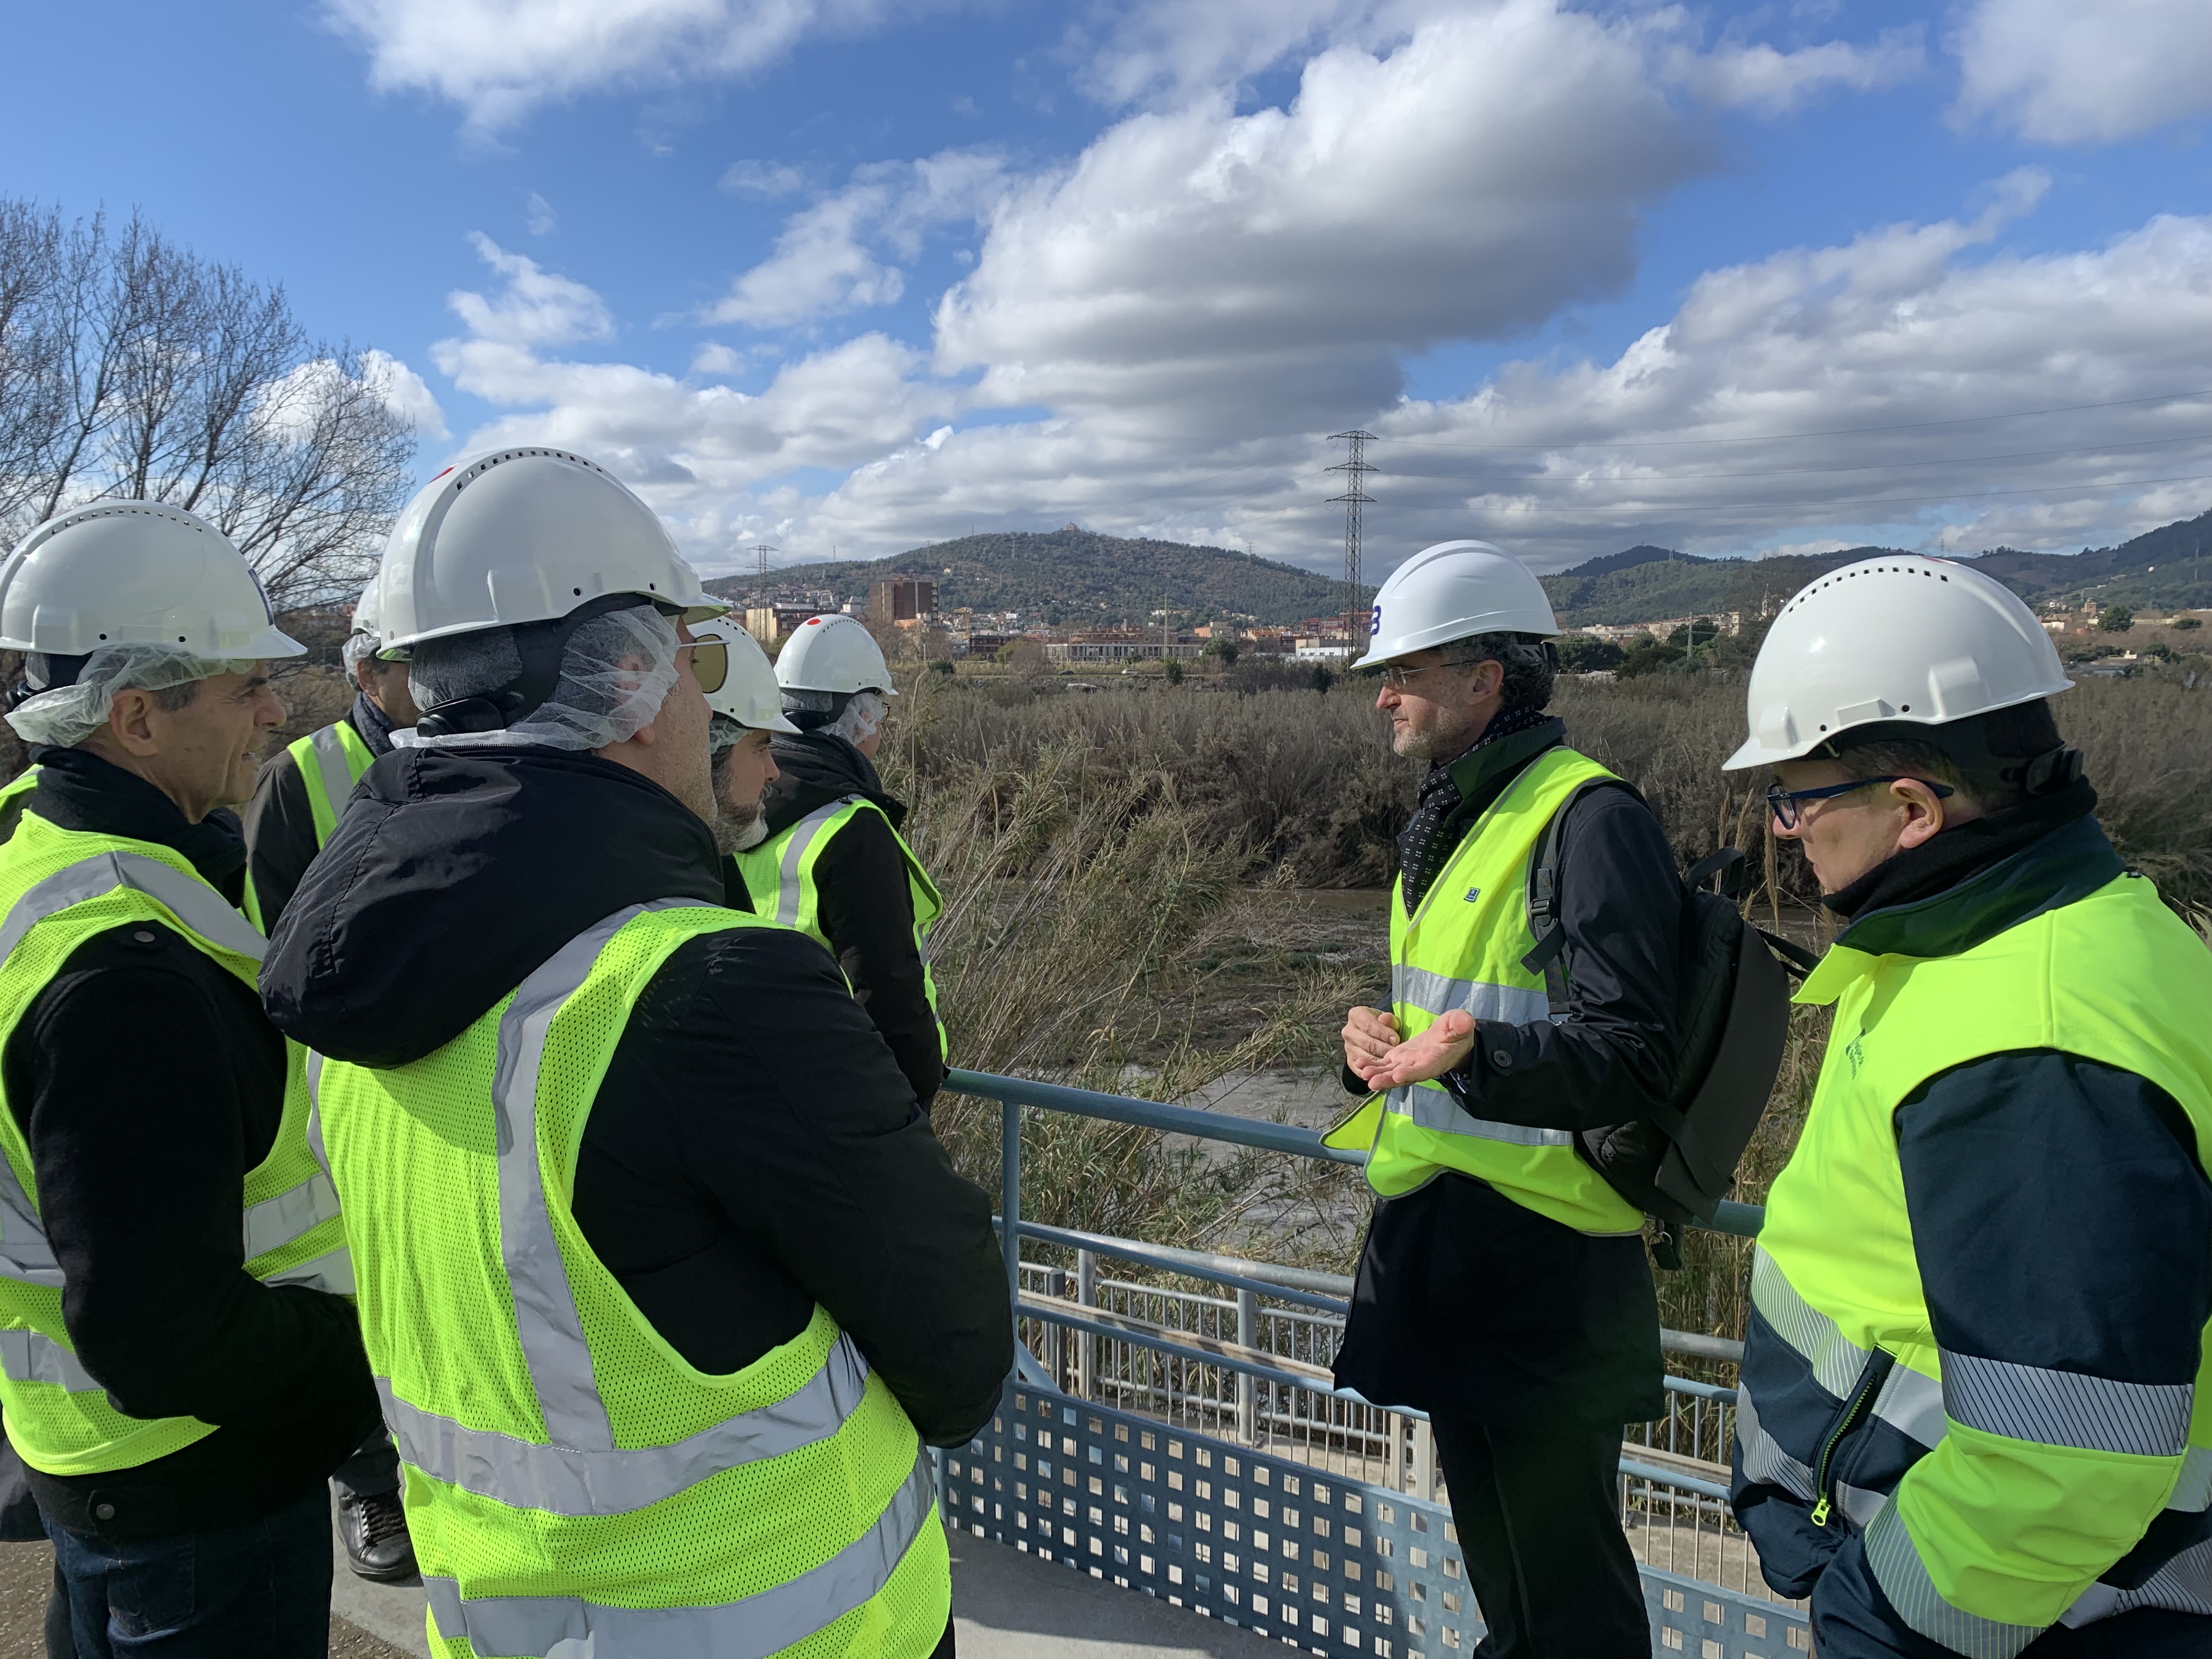 CCBC visita a planta potabilizadora de AGBAR: visita exclusiva a estação de tratamento de água Agbar em Sant Joan Despí